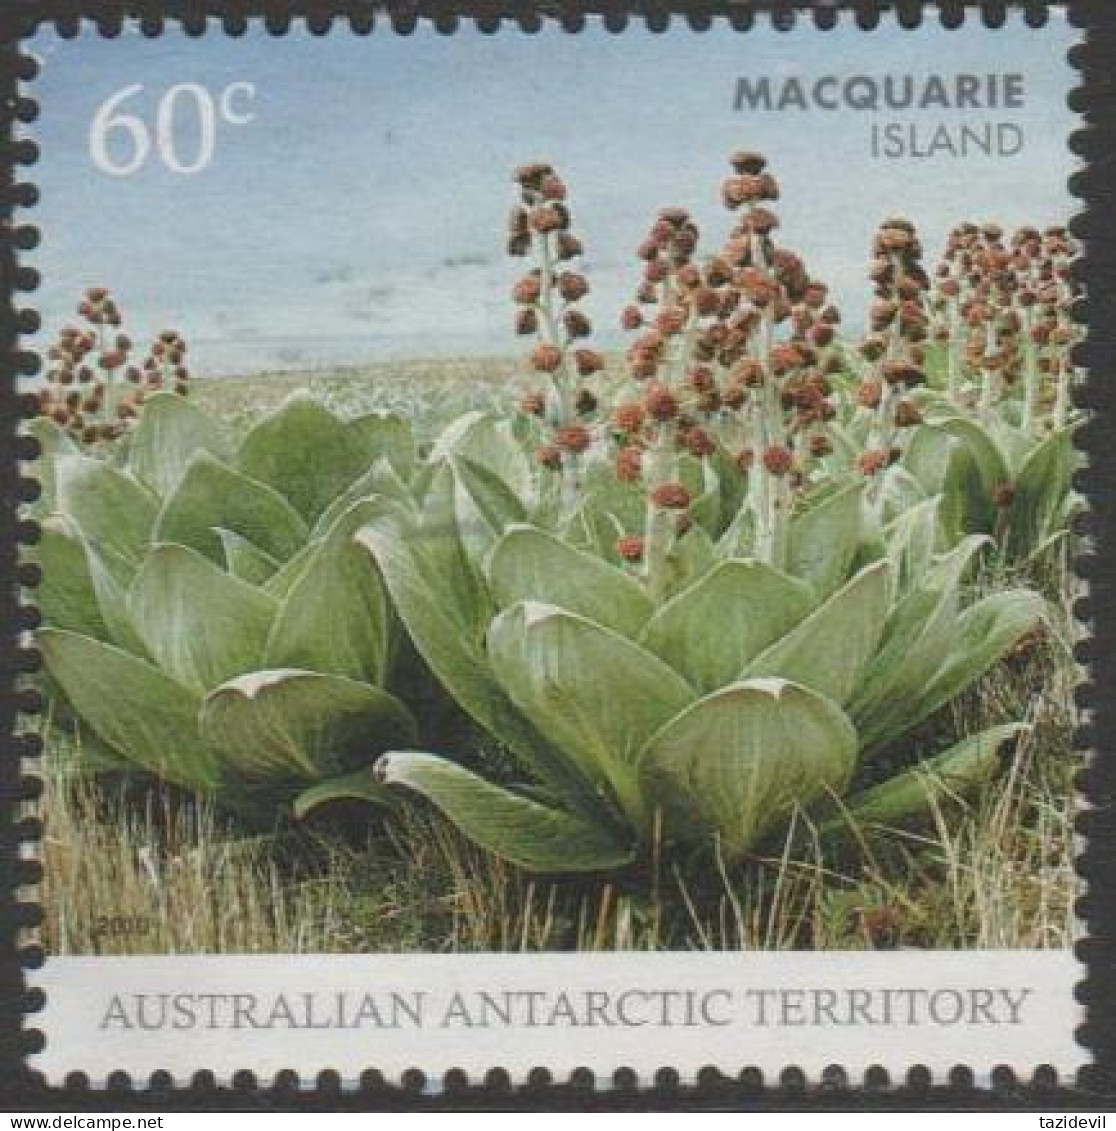 AUSTRALIALIAN ANTARCTIC TERRITORY - USED 2010 60c Macquarie Island - Flowers - Oblitérés